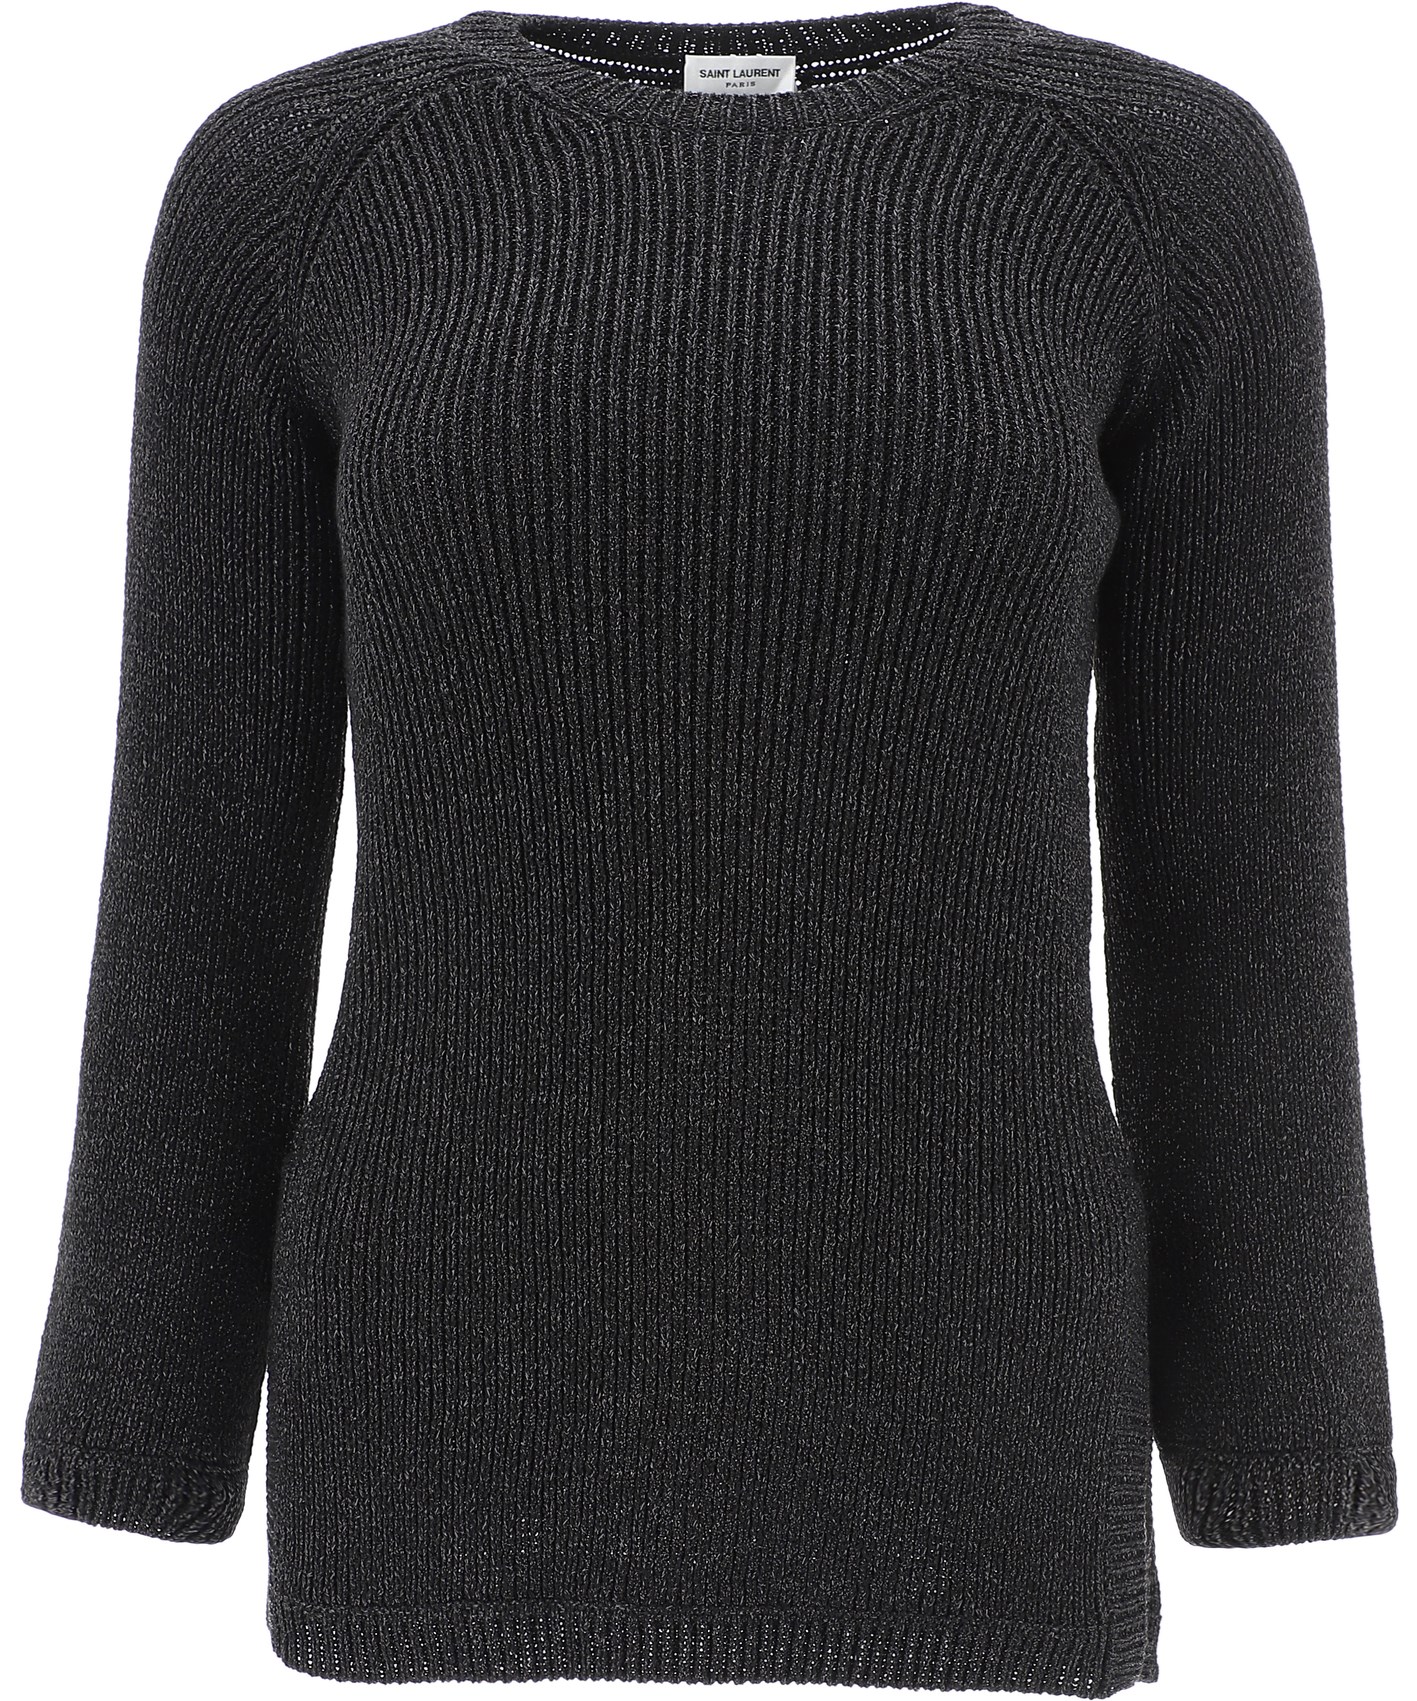 【Saint Laurent】Stretch sweater with lurex